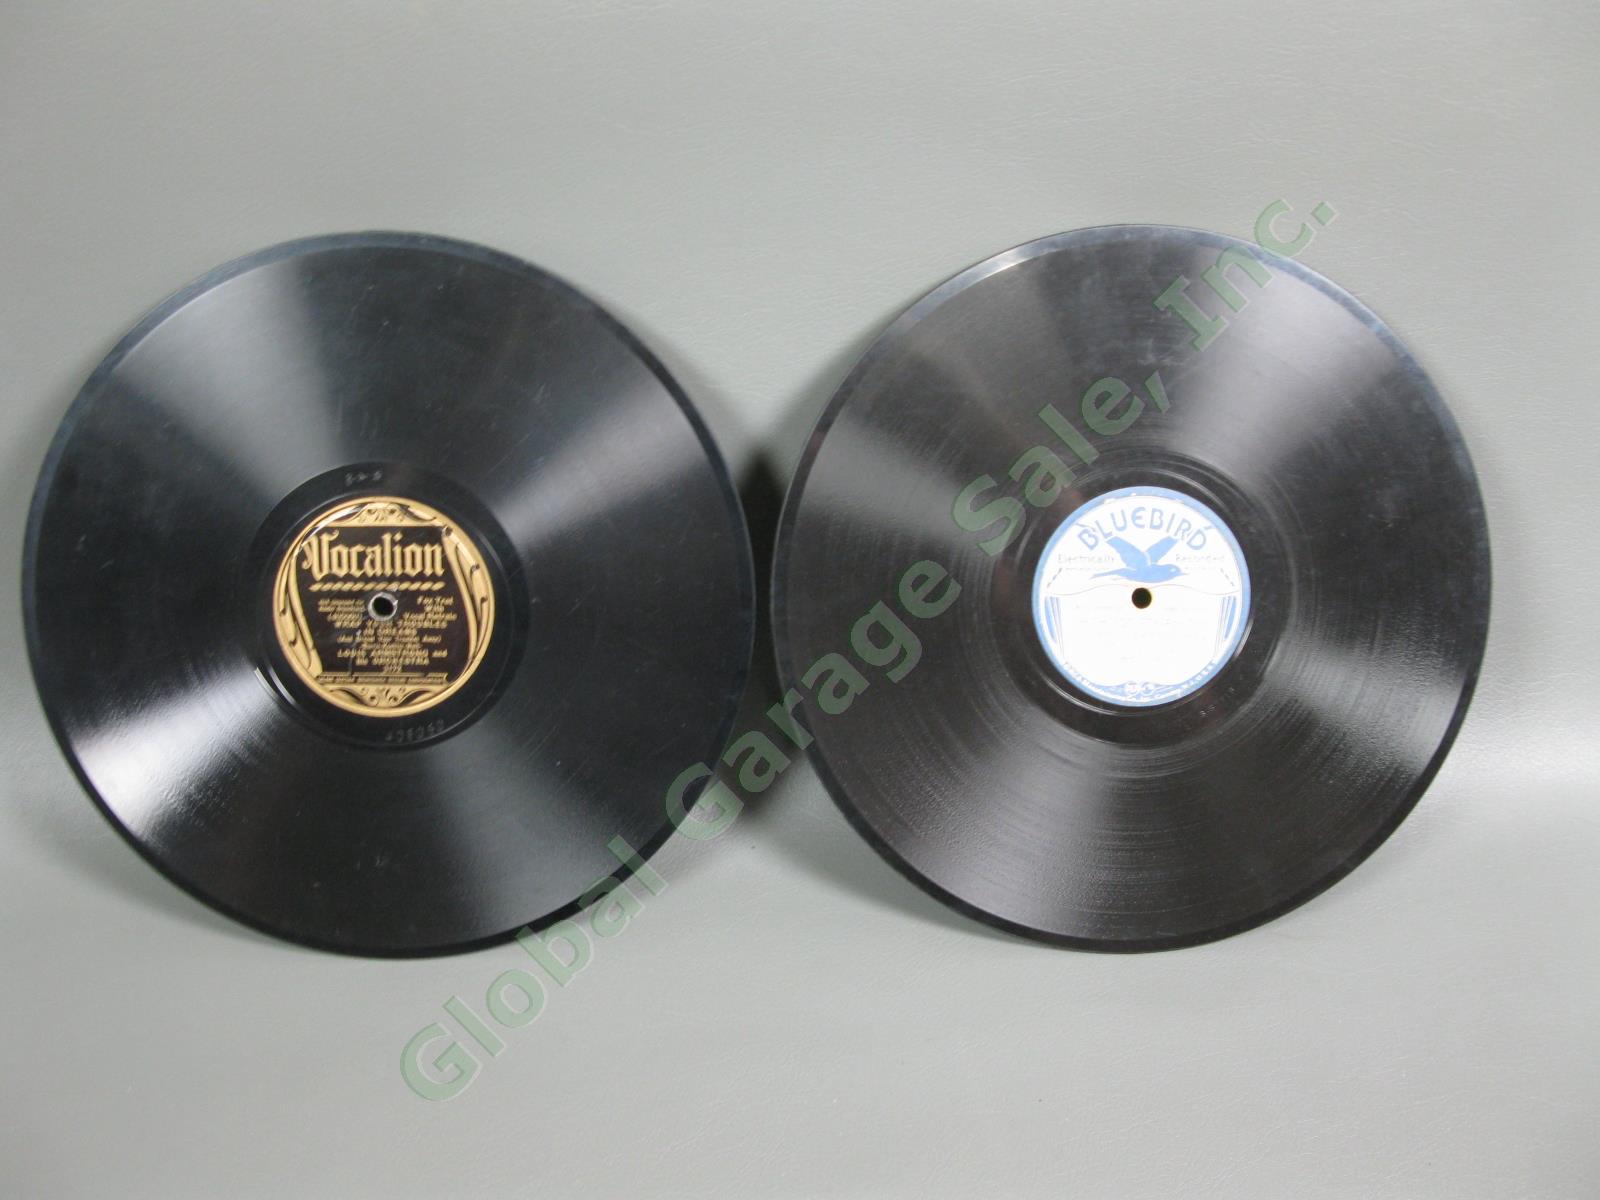 6 Vintage 10" 78rpm Louis Armstrong Vinyl Record Album Jazz Foxtrot Collection 3